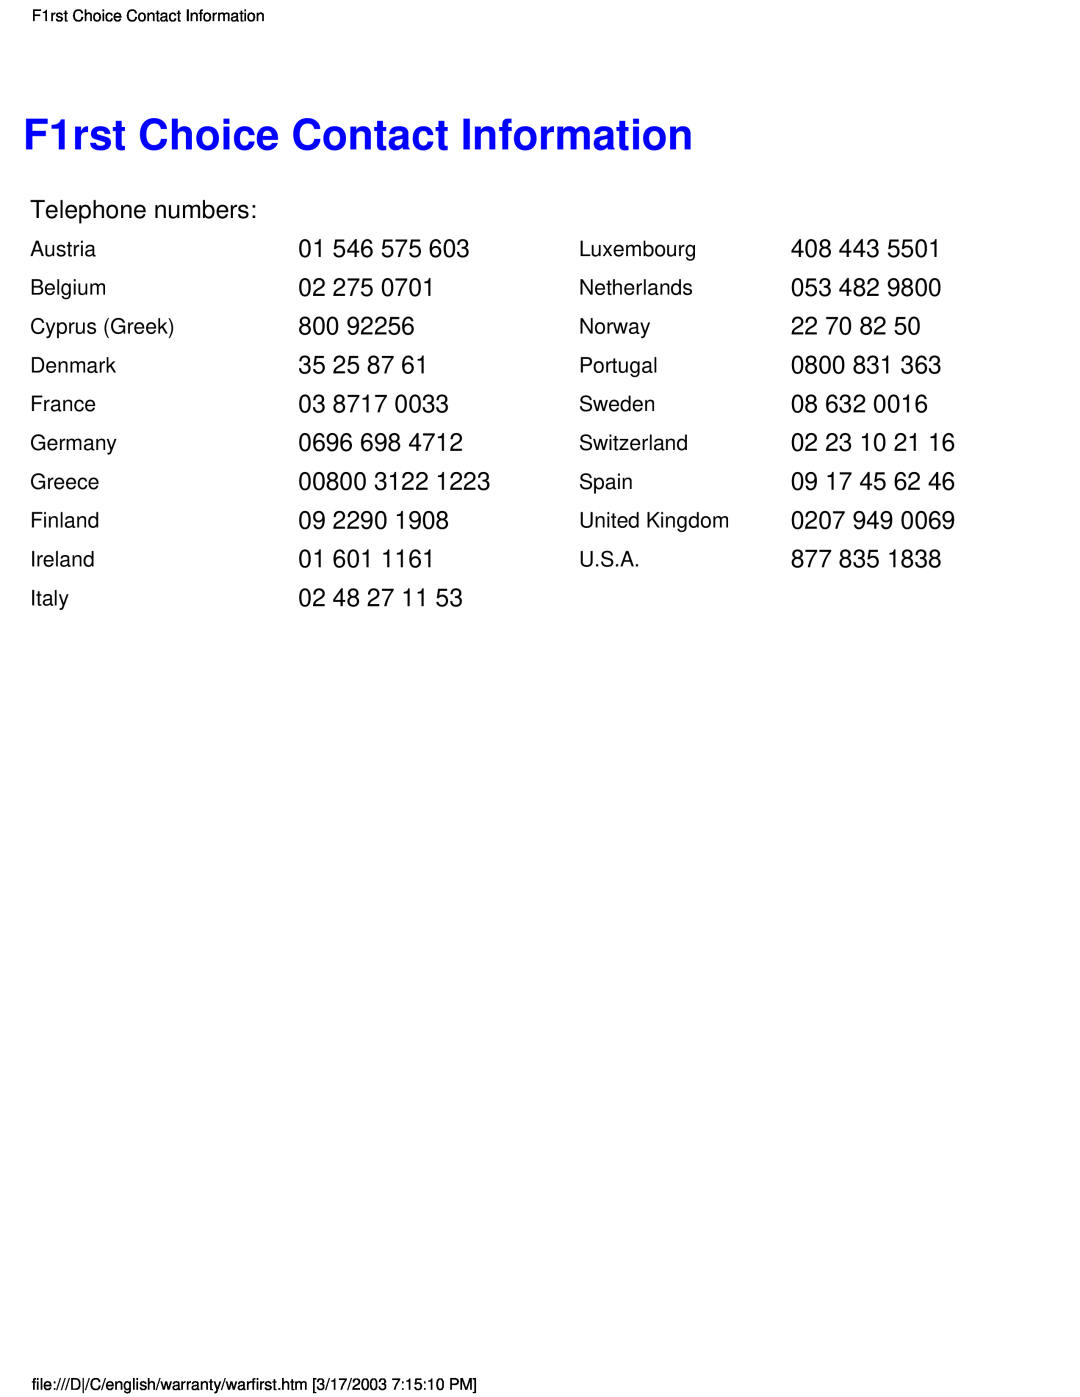 Philips 150P4CS, 150P4CG user manual F1rst Choice Contact Information 